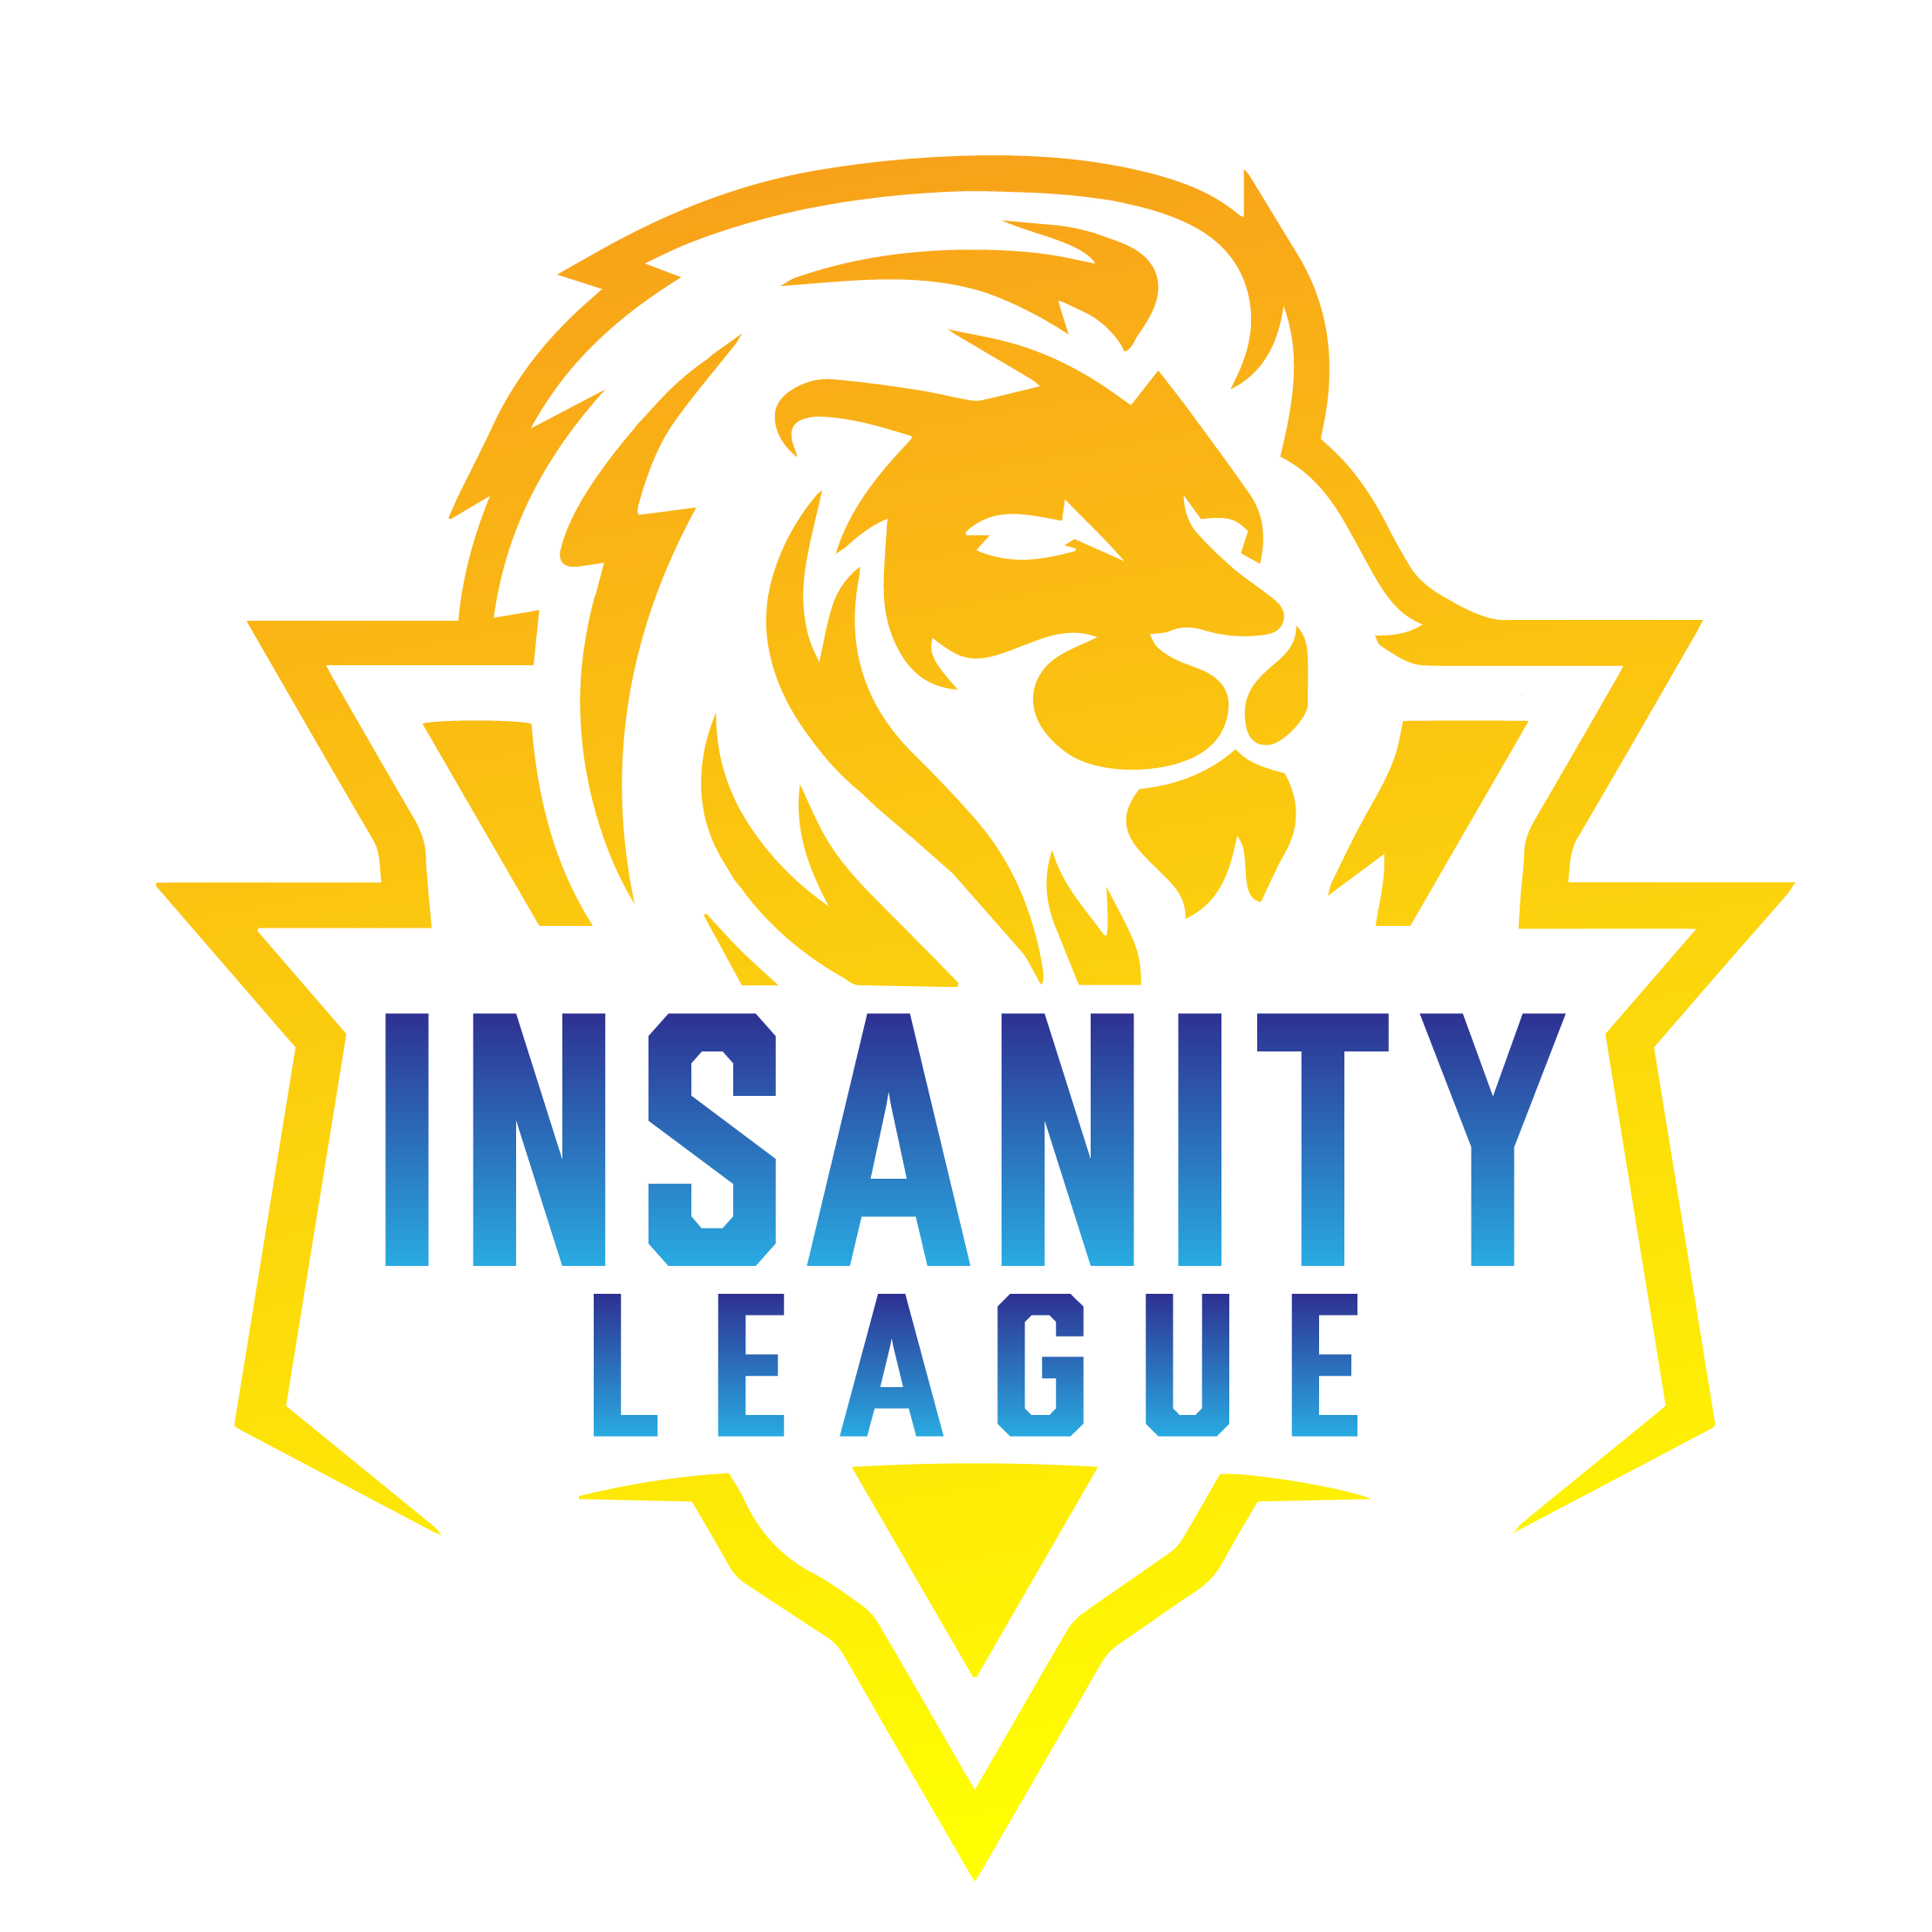 Insanity League